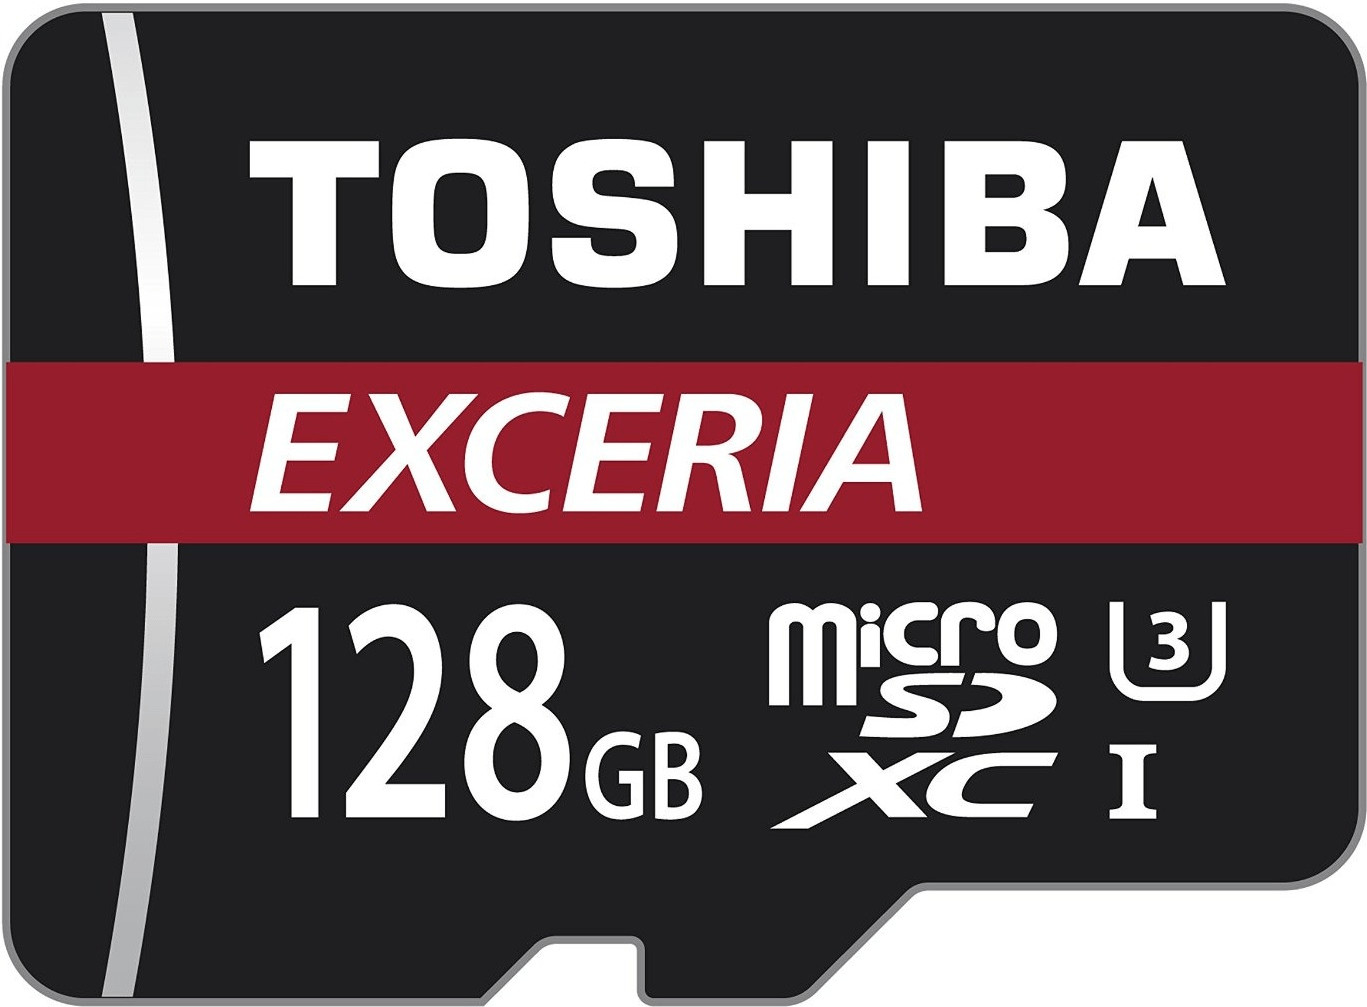 Toshiba EXCERIA M302 128GB